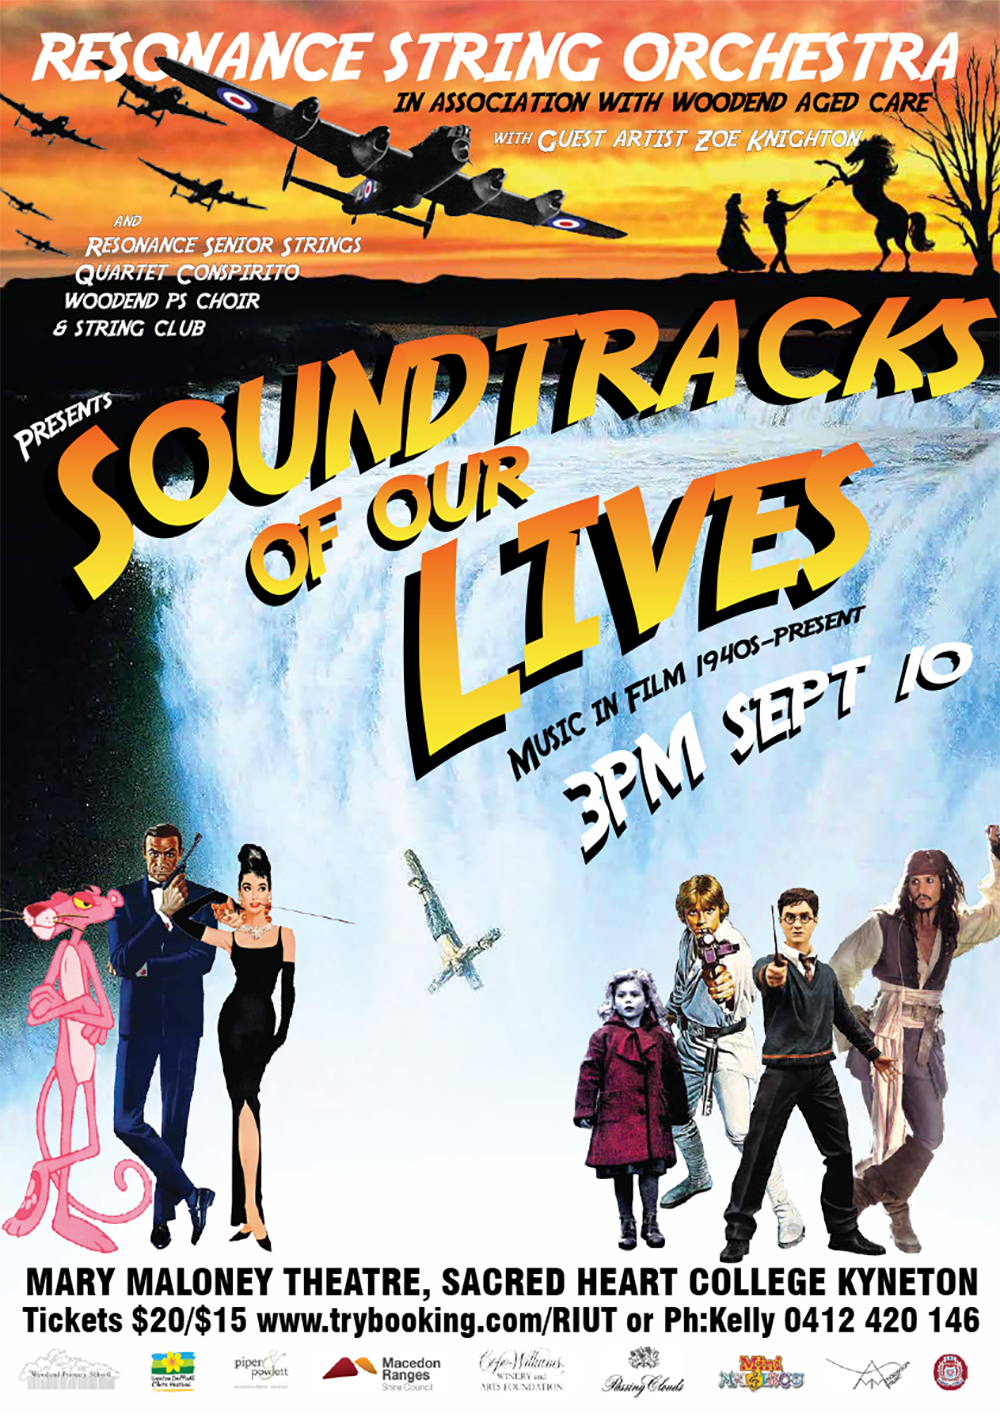 Soundtrackss Of Our Lives poster V2 copy.jpg